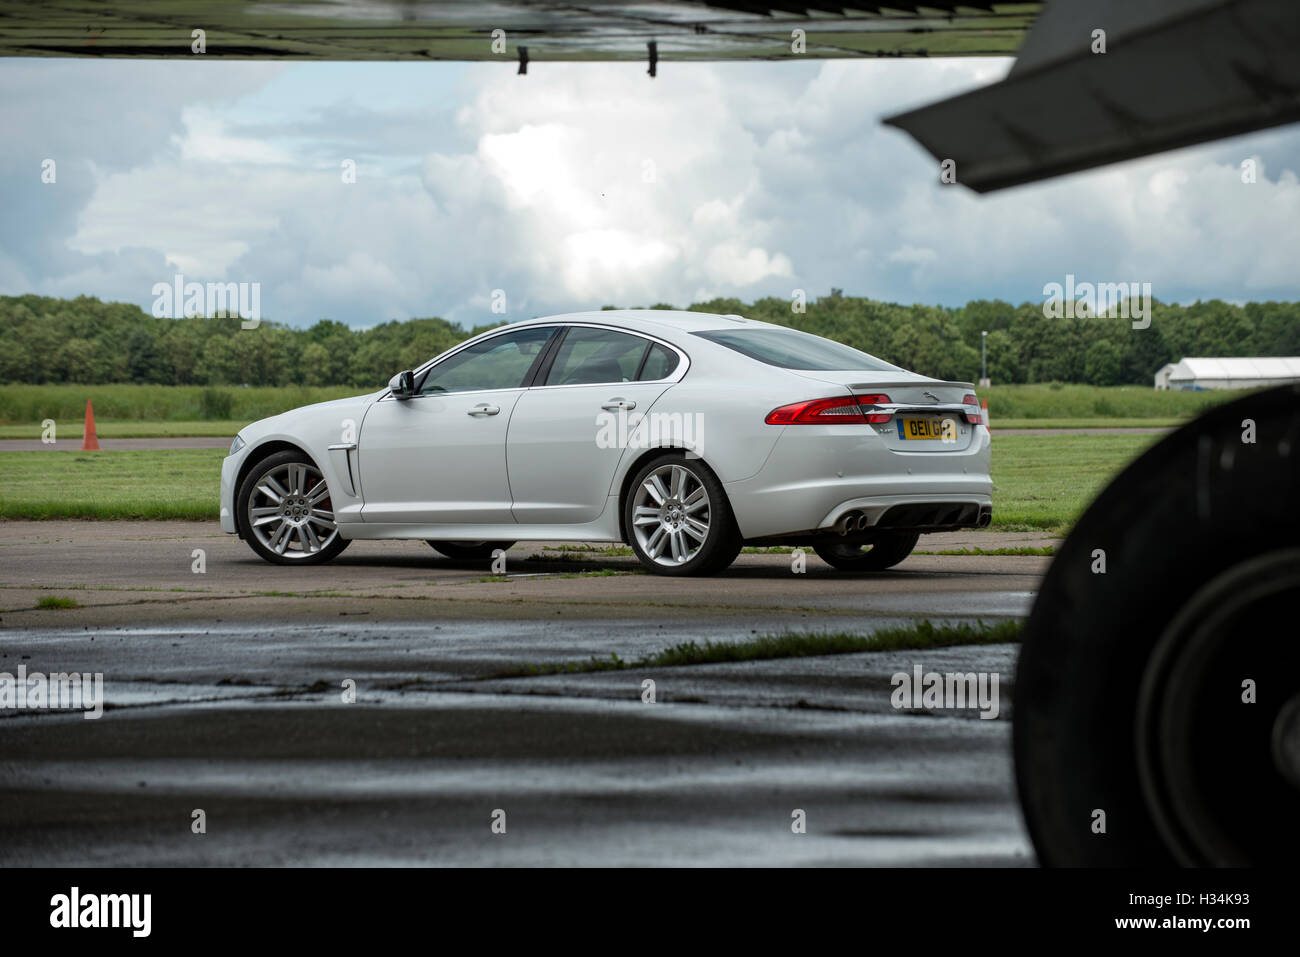 2011 Jaguar XFR super saloon, British luxury car Stock Photo